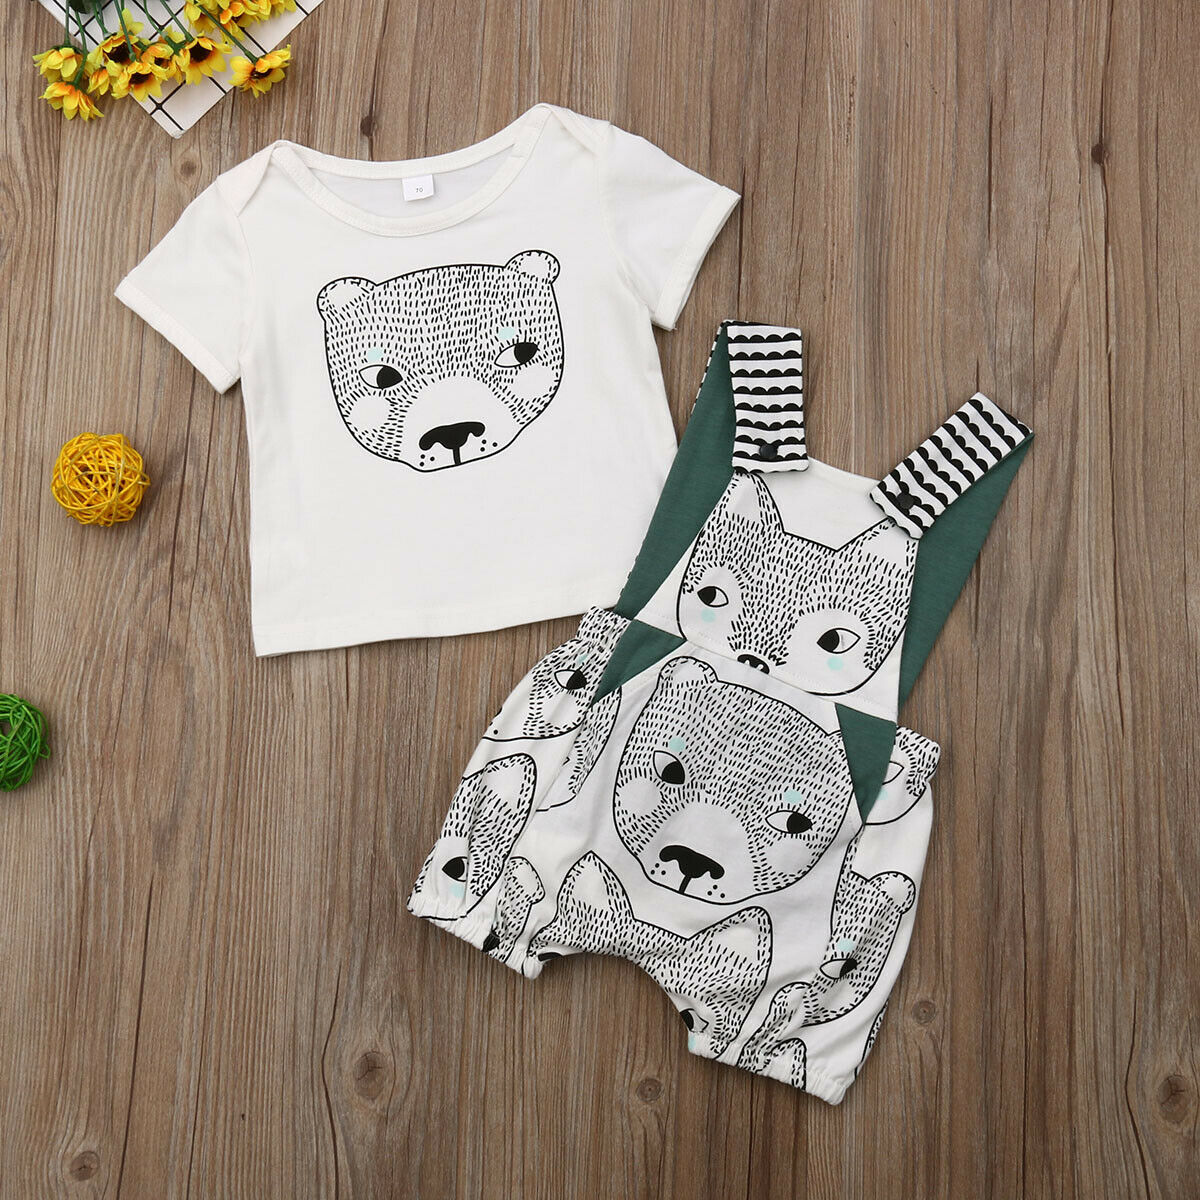 2019 Children Summer Clothing Newborn Toddler Baby Boys Girls Cartoon Print Casual T-shirt+Bib Pant overalls Shorts 2Pcs Set